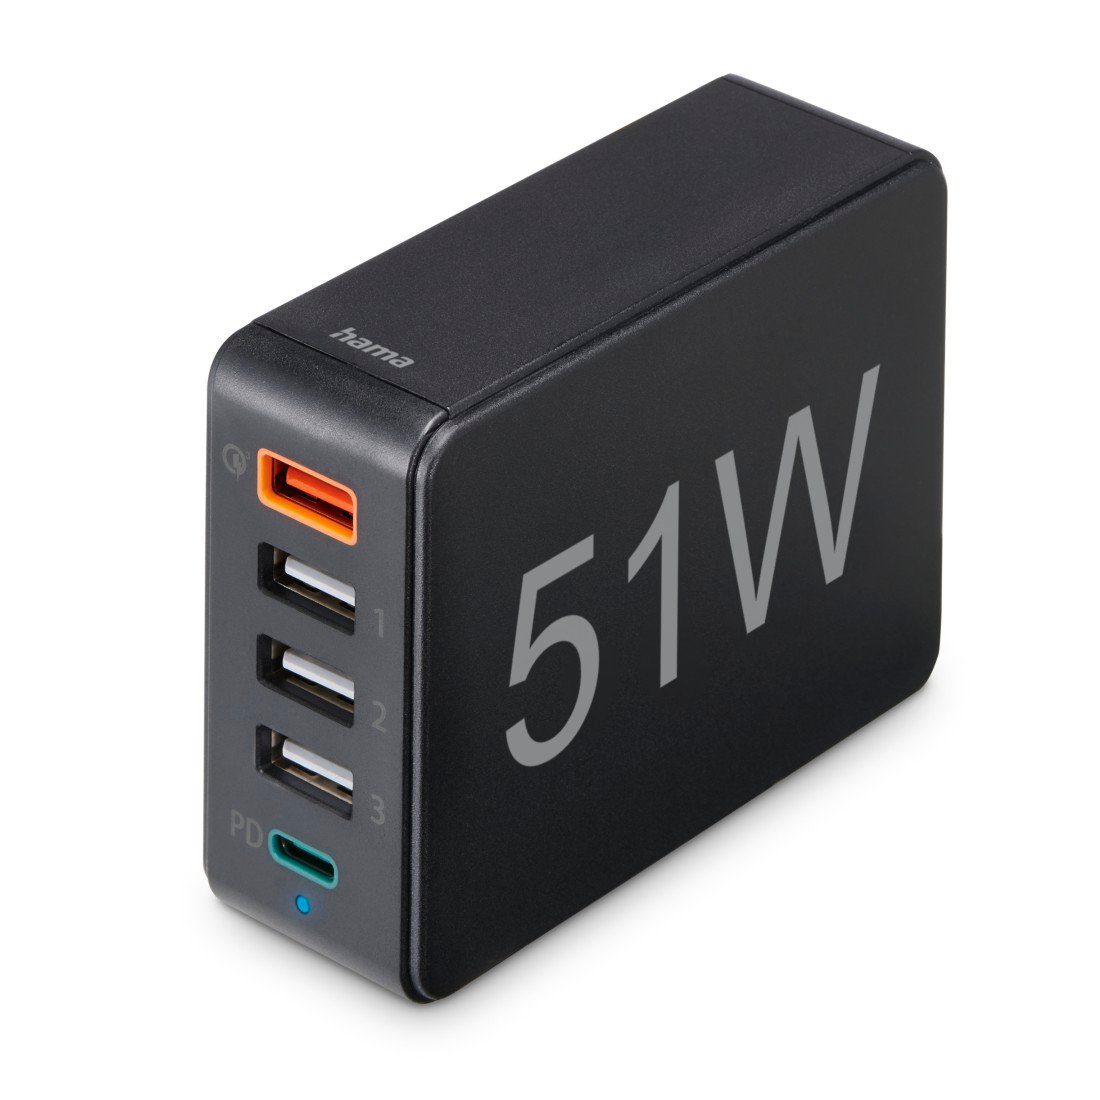 Bolwins D97C 6 Fach 6A 5V USB Port Netzteil Adapter Ladegerät Ladestation  USB-Ladegerät